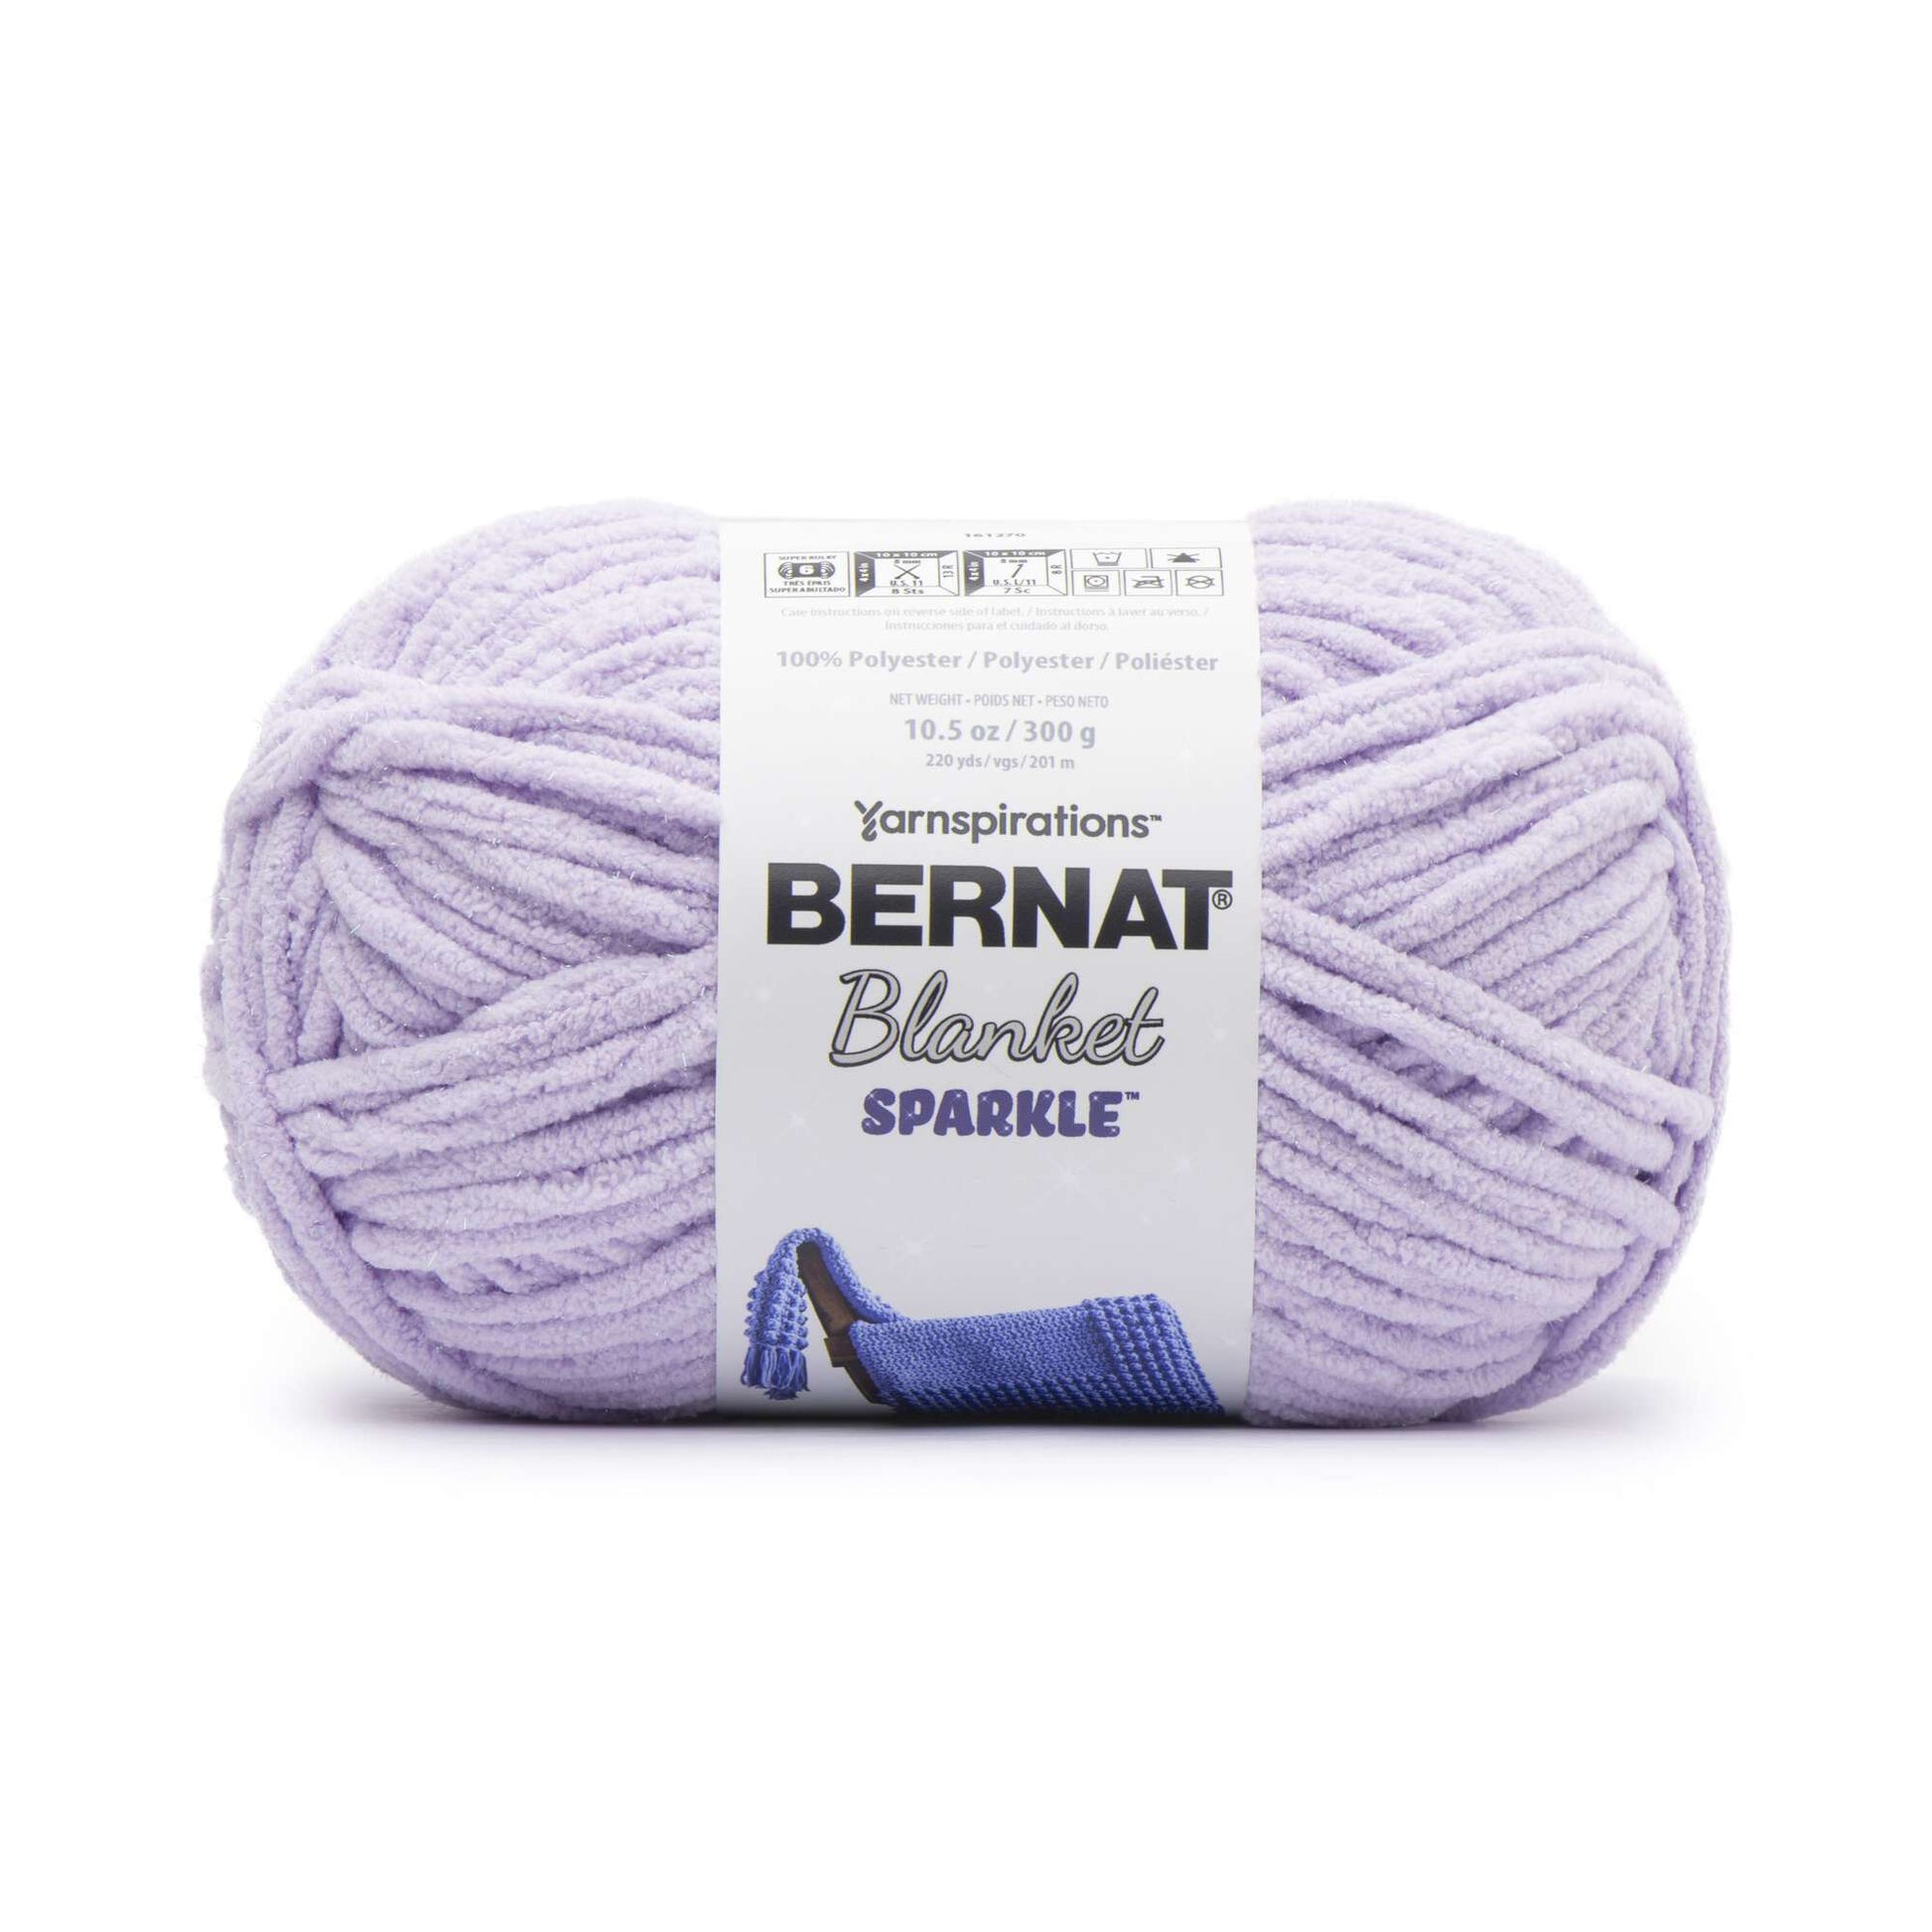 Bernat Blanket 300g Ball Yarn - American Yarns